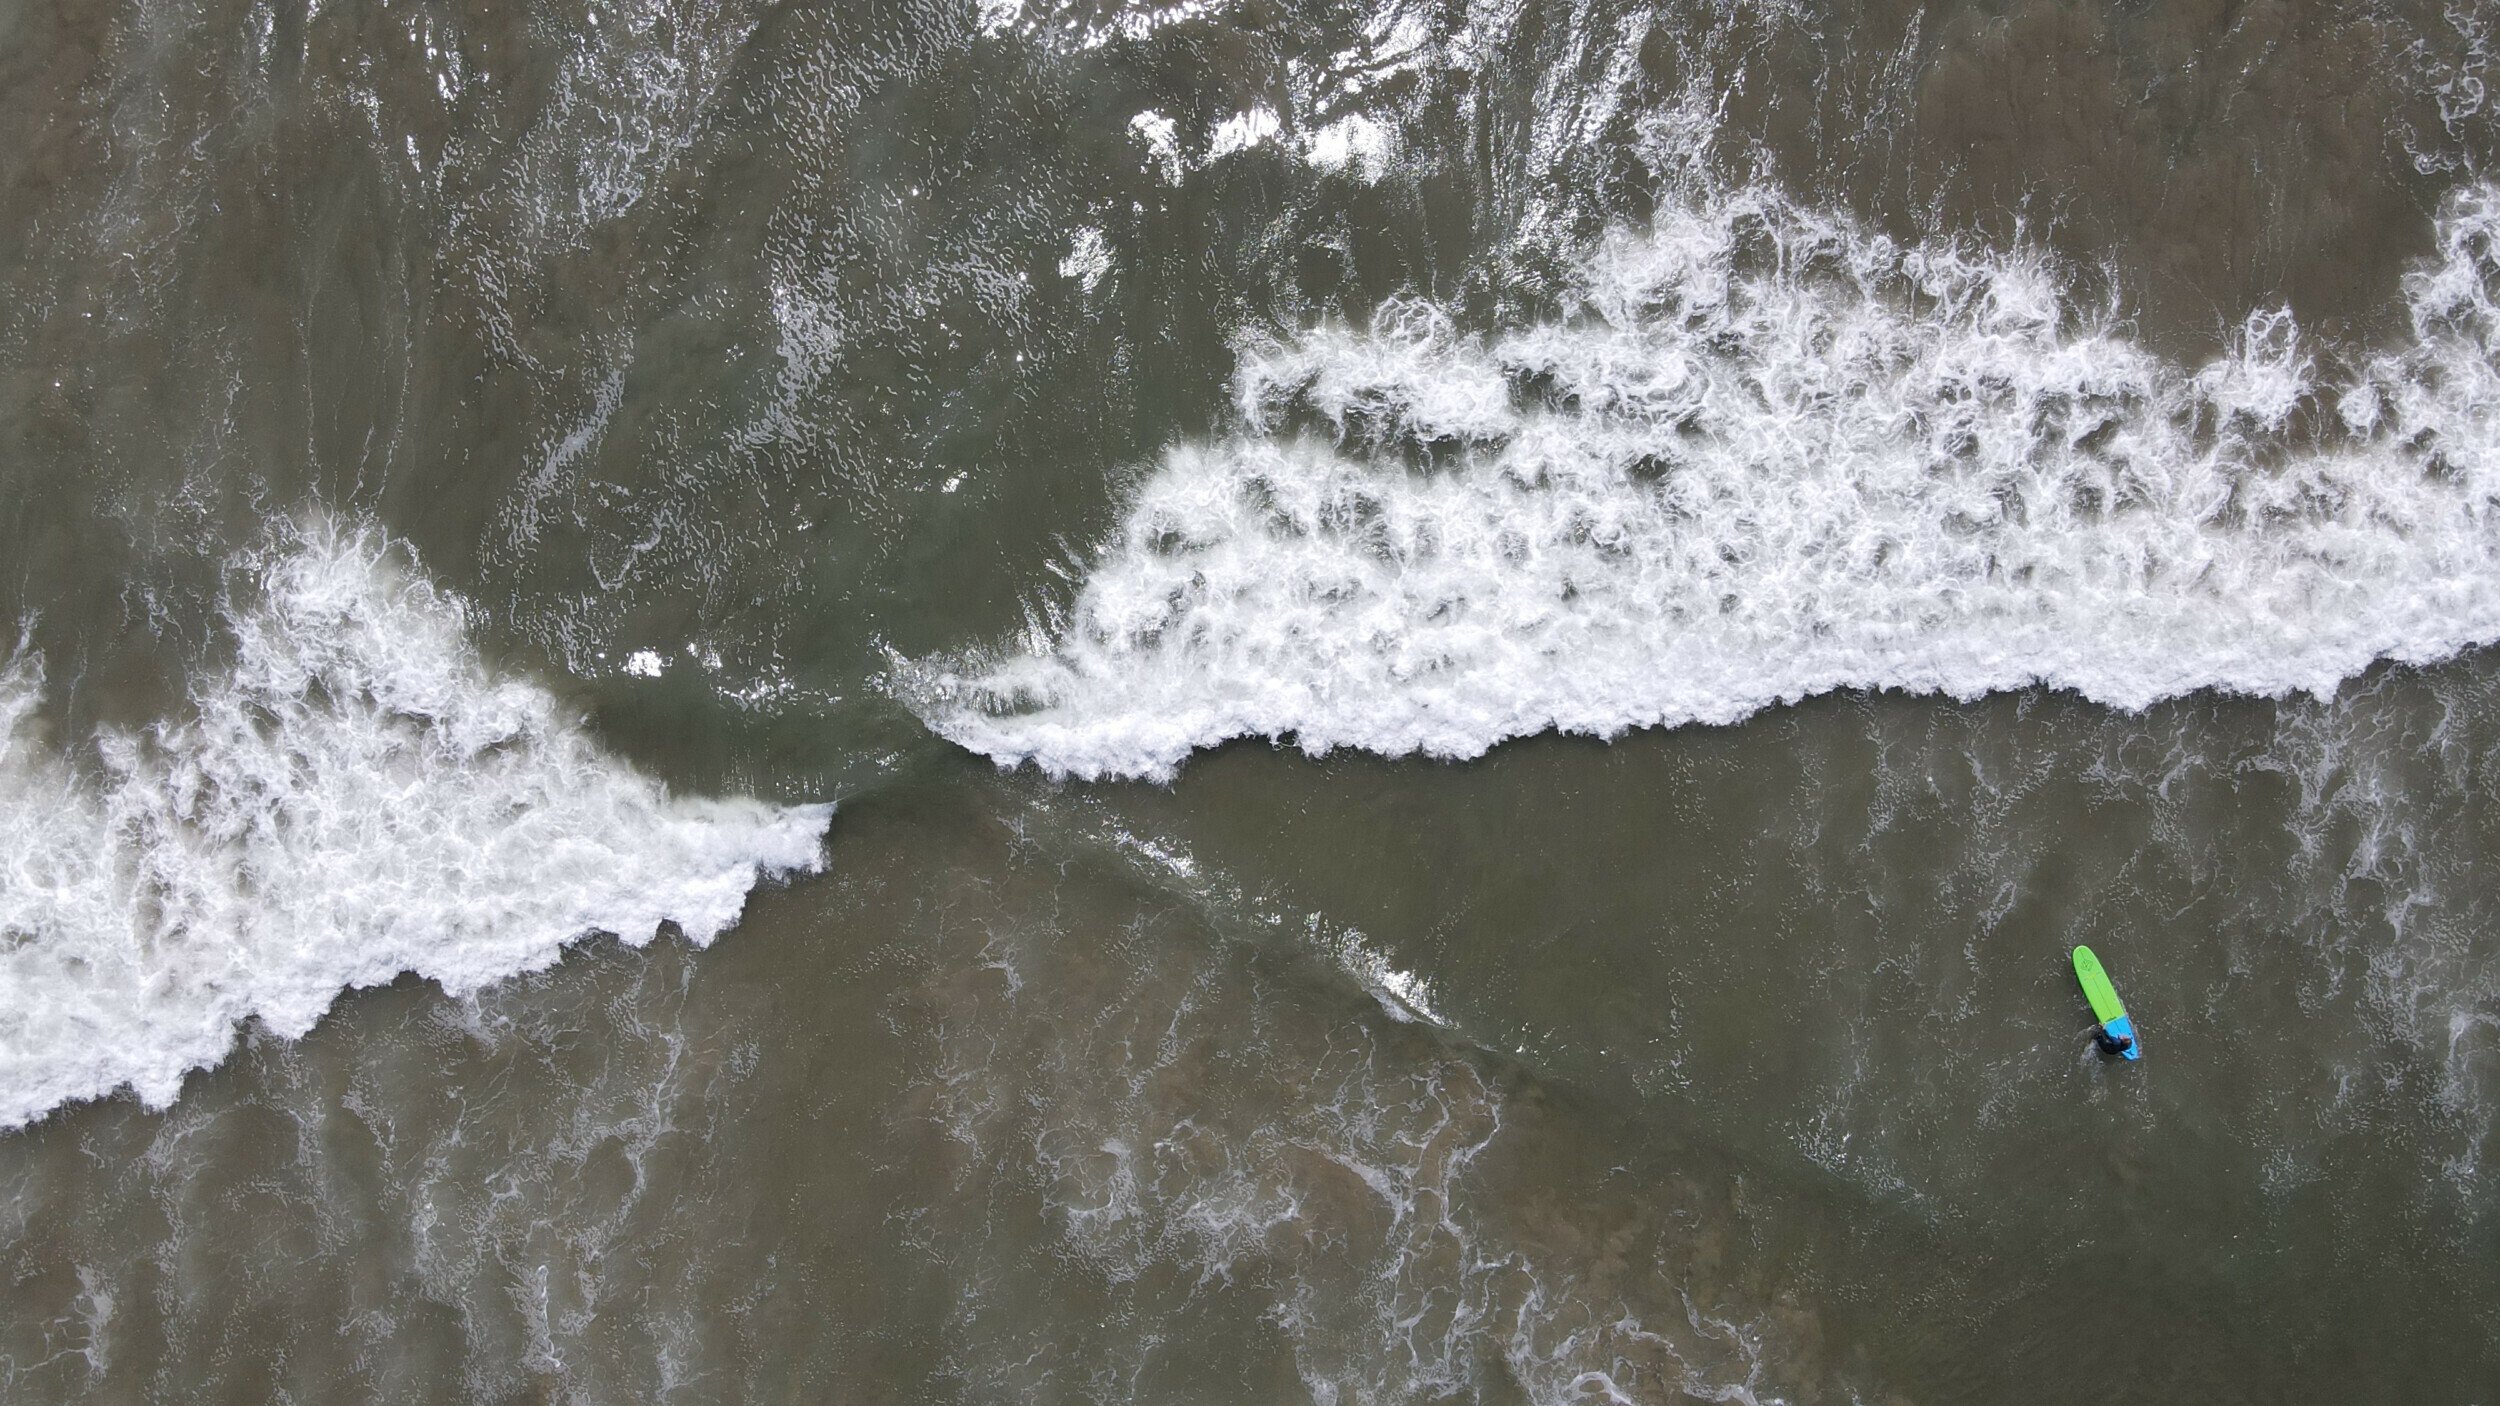 Aerial shot of a lone surfer amidst the foamy waves of Malibu Beach, captured by DJI Mavic Air 2.